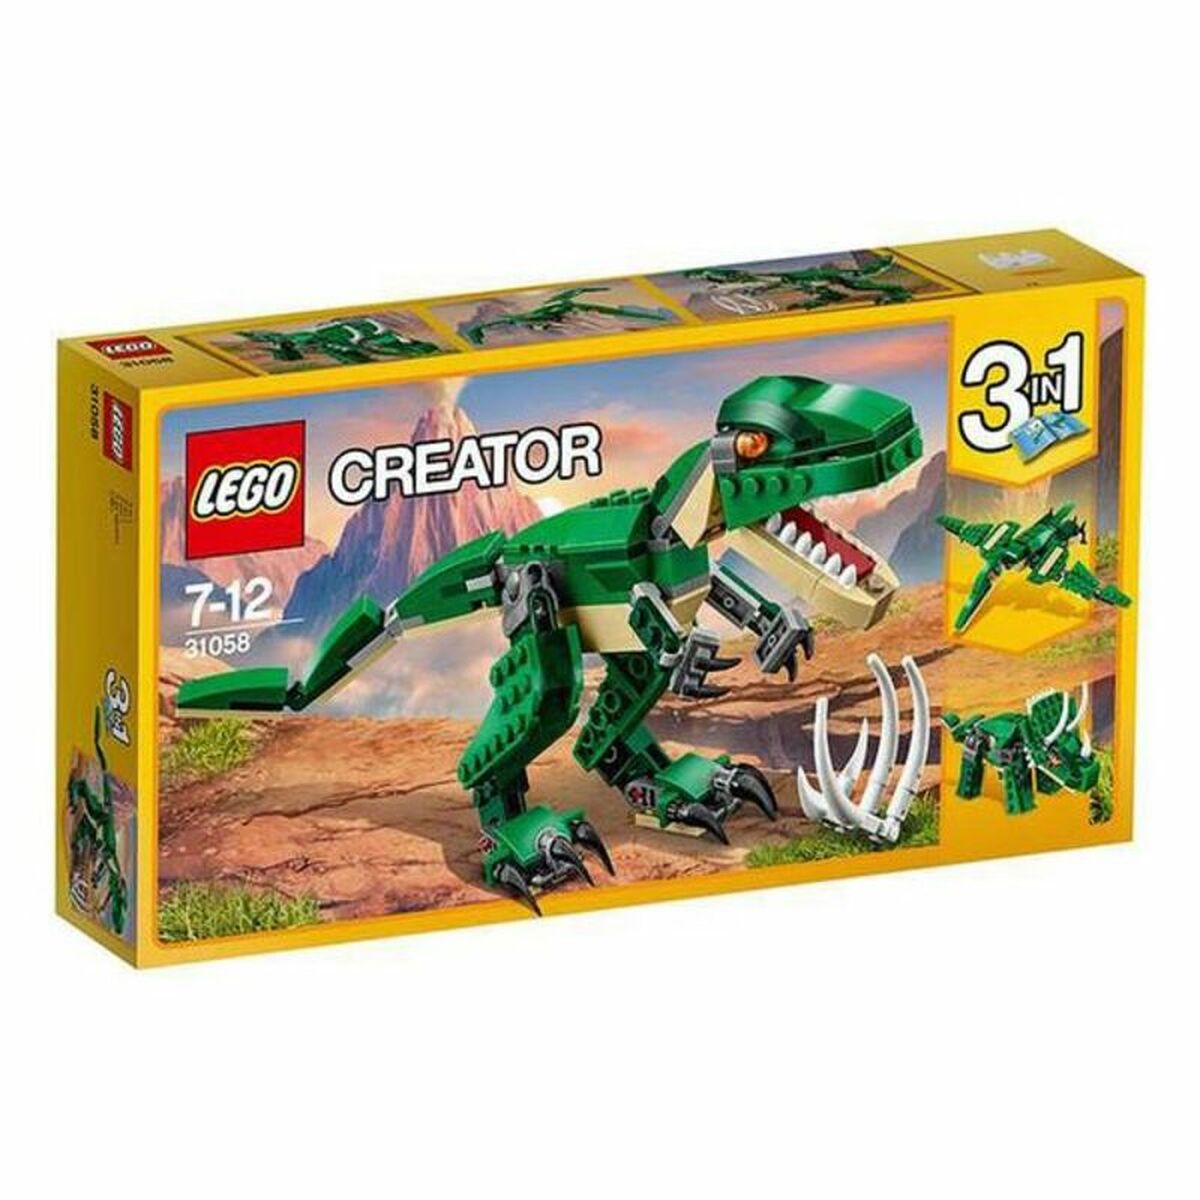 Creator Mighty Dinosaurs Lego 31058